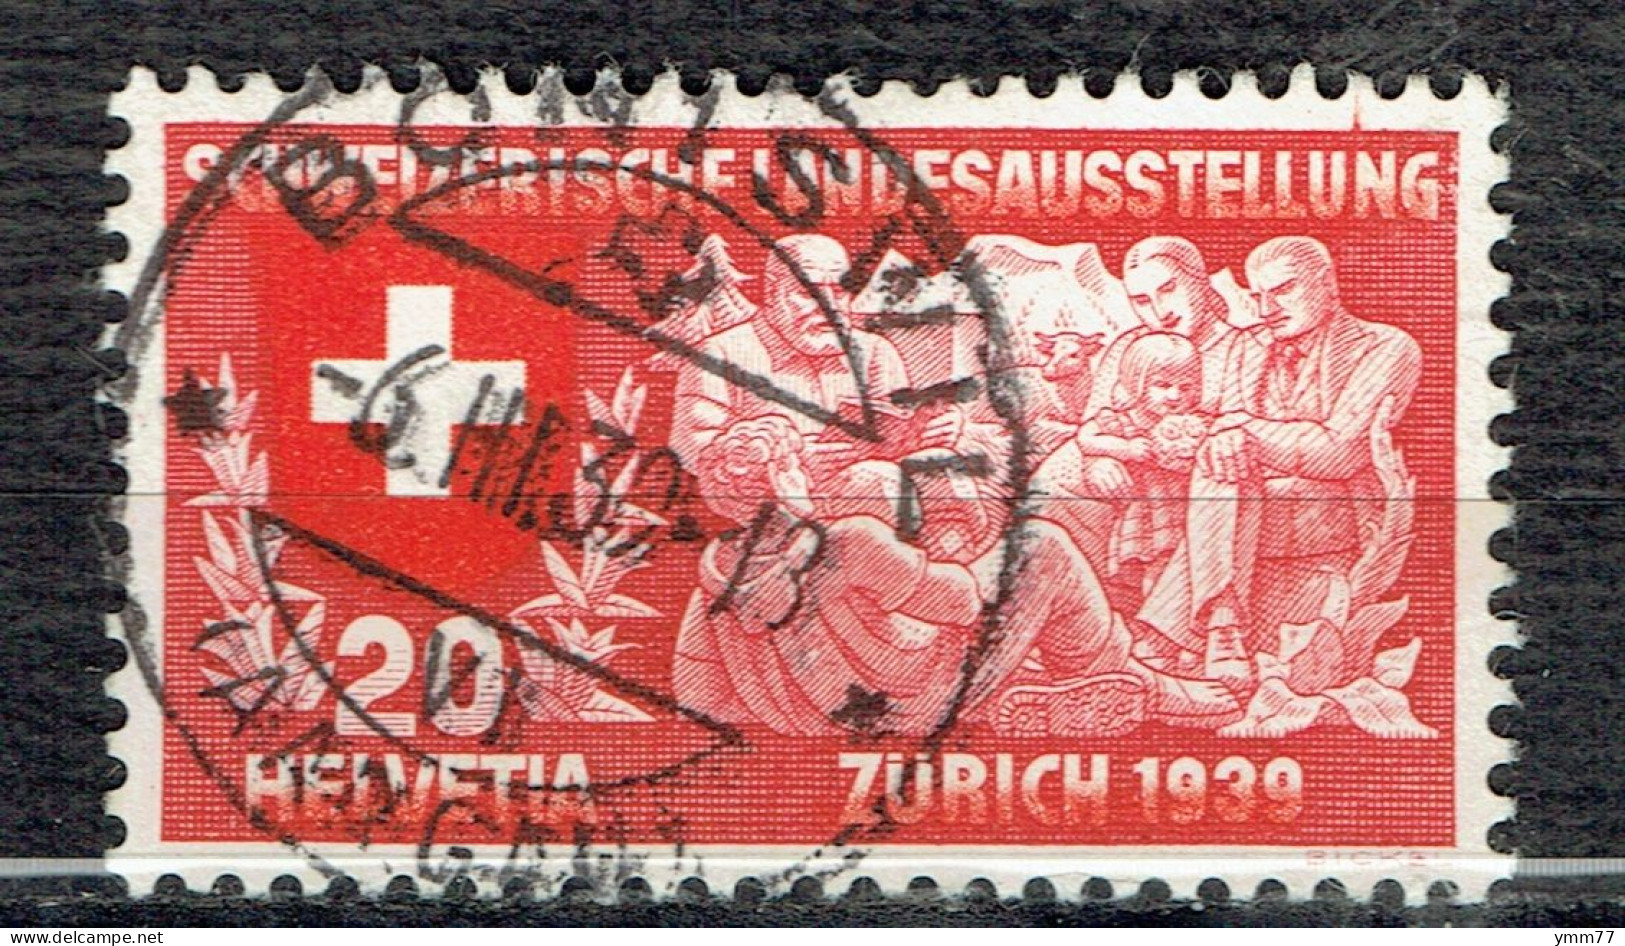 Exposition Nationale De Zurich : Allégorie De L'effort Spirituel Du Peuple Suisse (en Allemand) - Used Stamps